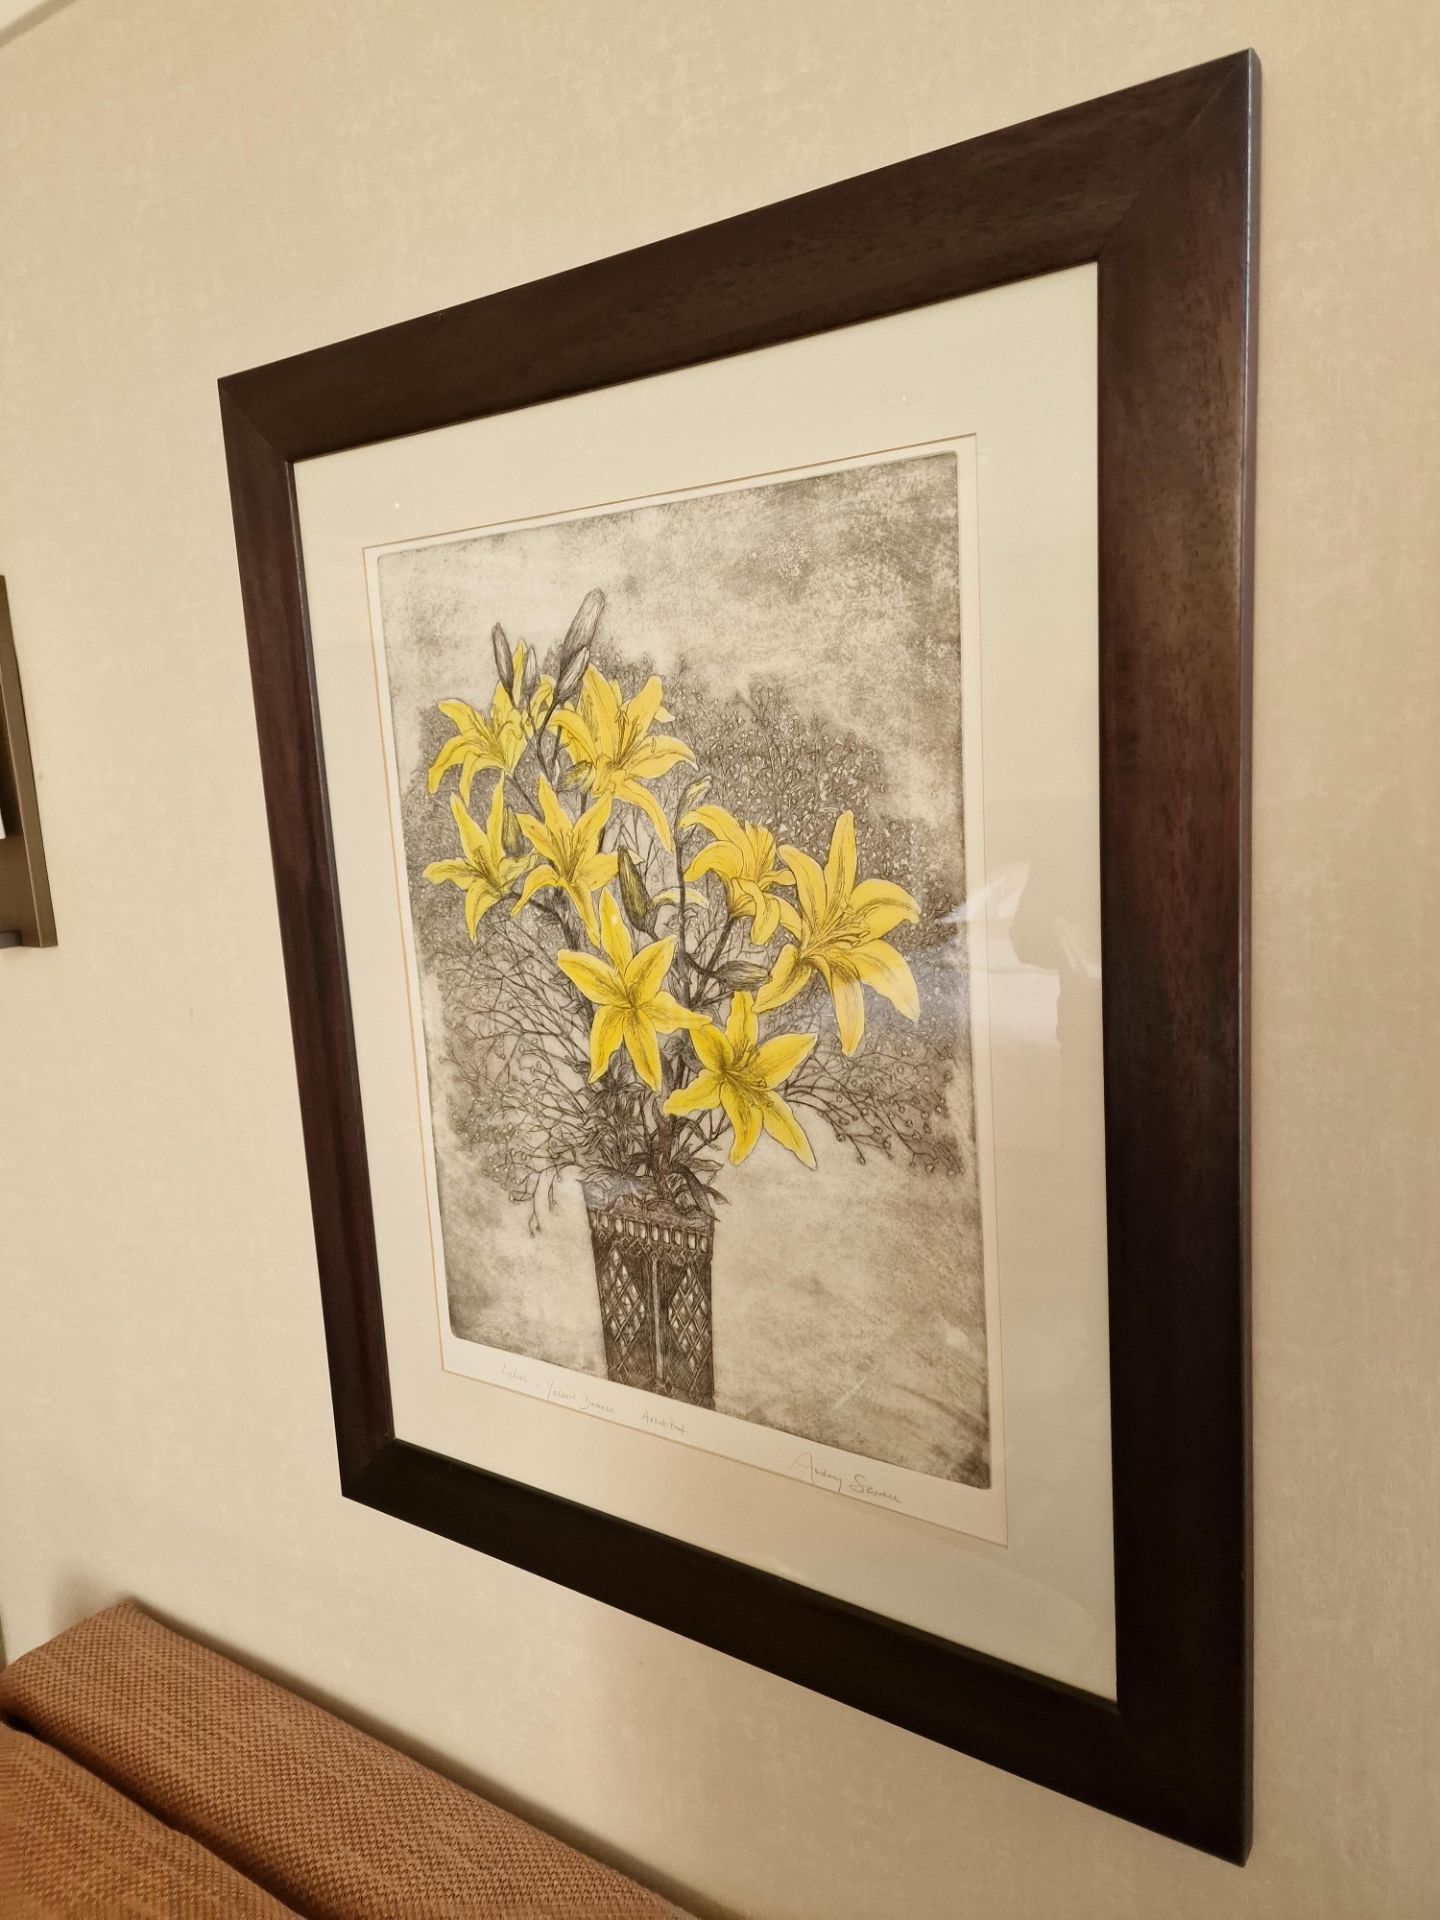 Audrey Scovell (British) framed art work titled Lillies Yellow Damask Artist Proof in walnut